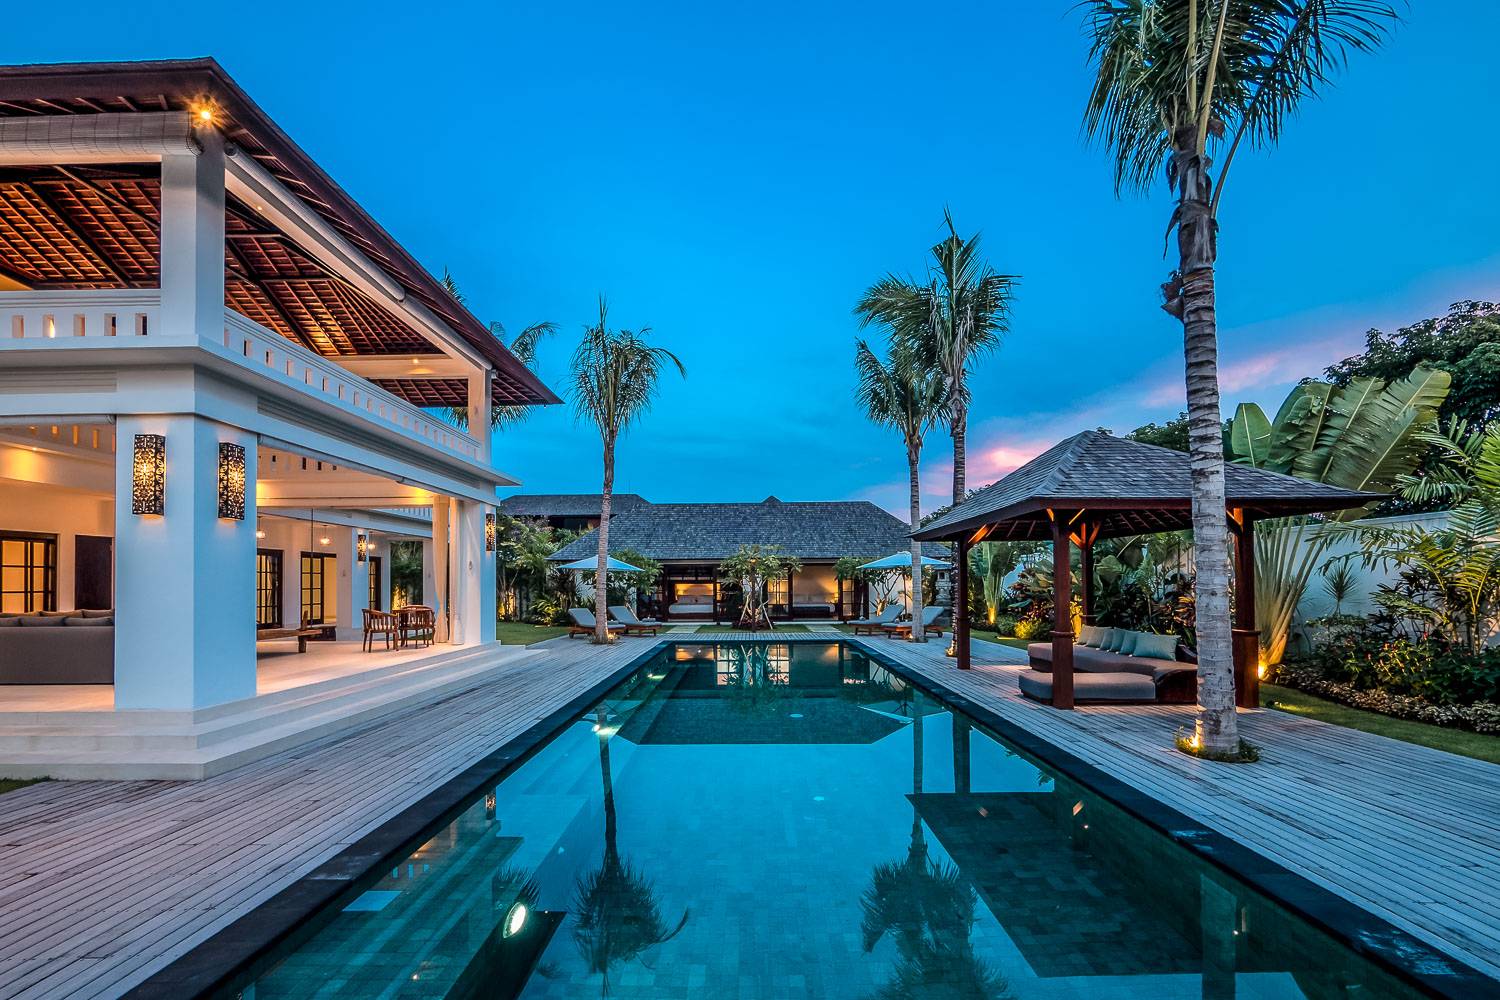 6 Bedroom Luxury Seminyak Villa With Pool At Bali Villagetaways